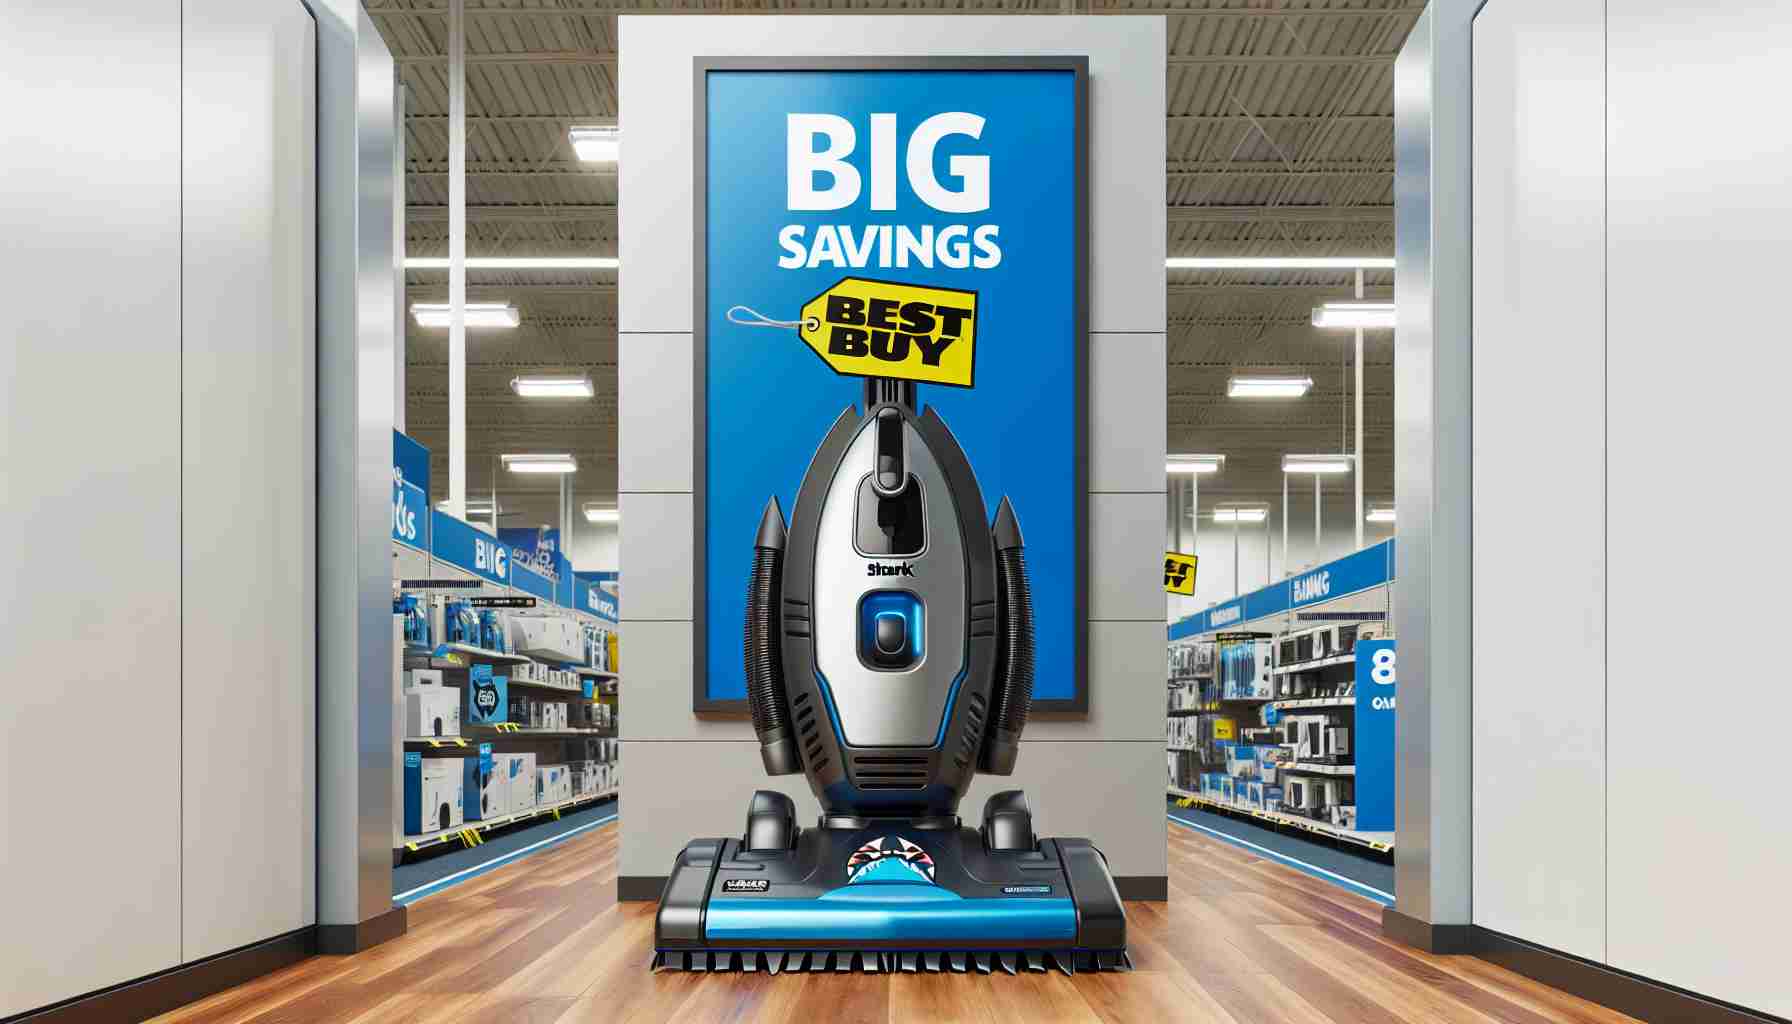 Big Savings on Shark Robot Vacuum at Best Buy